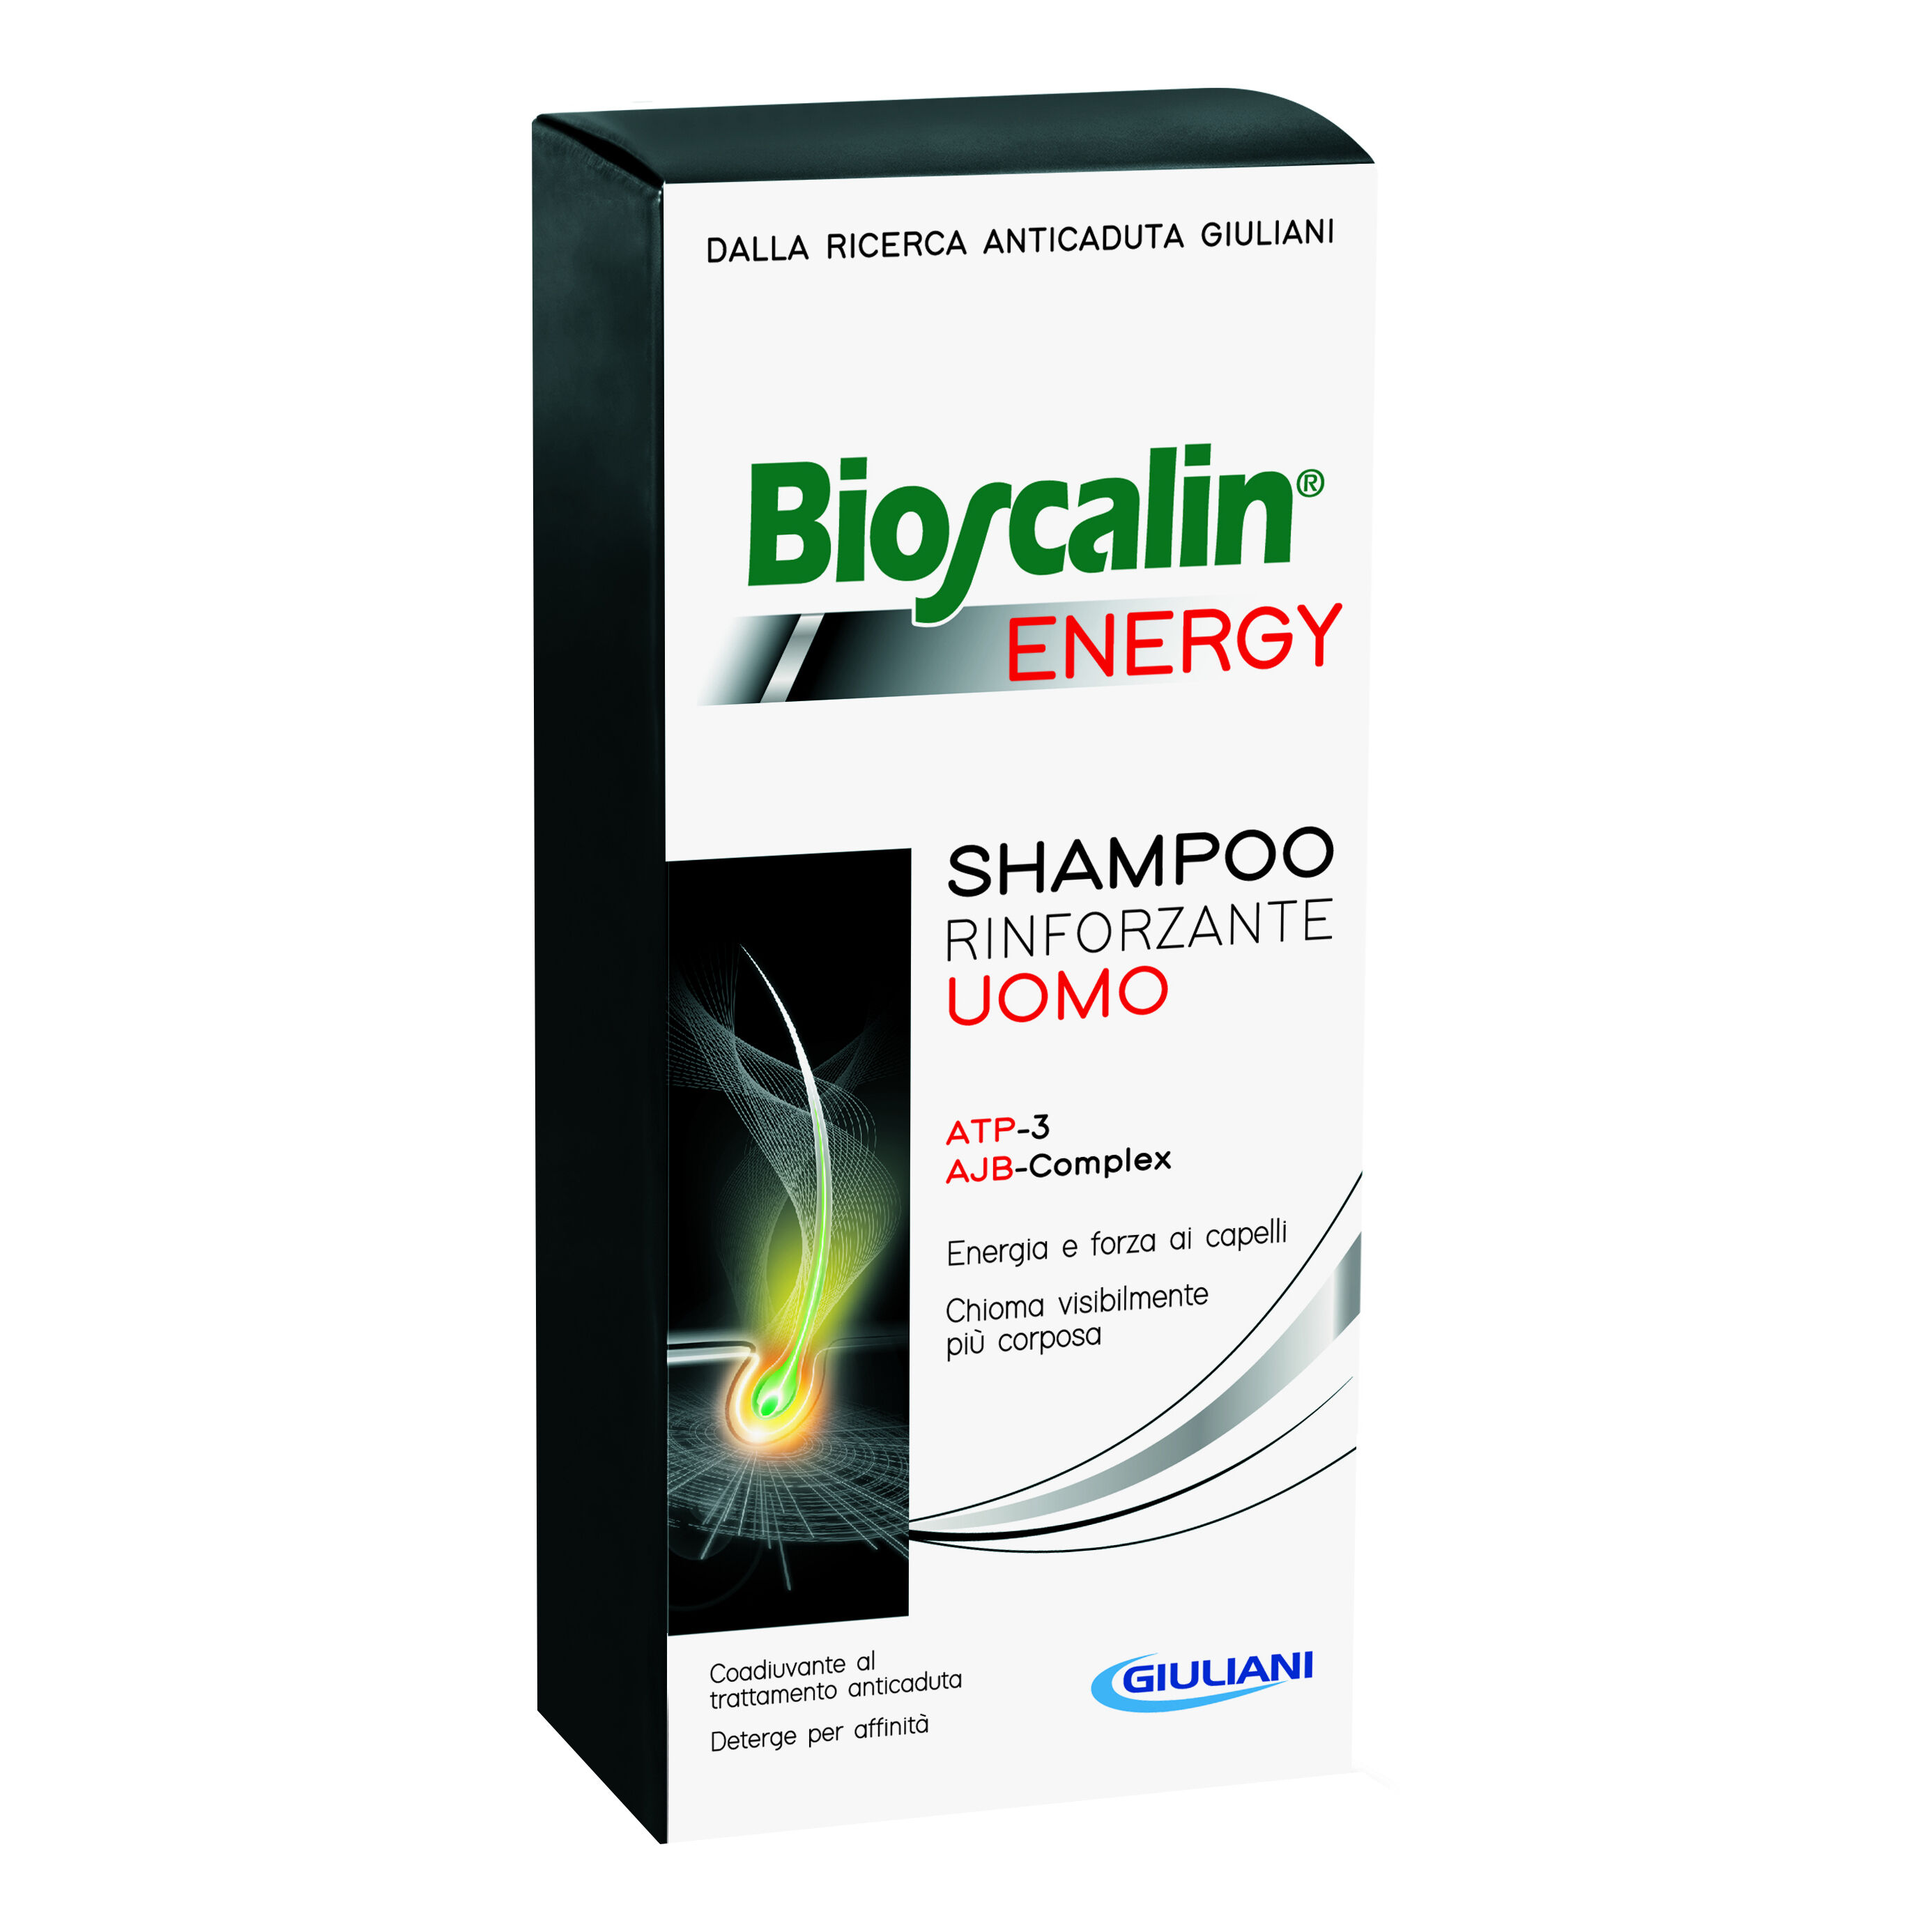 giuliani bioscalin energy shampoo 200ml